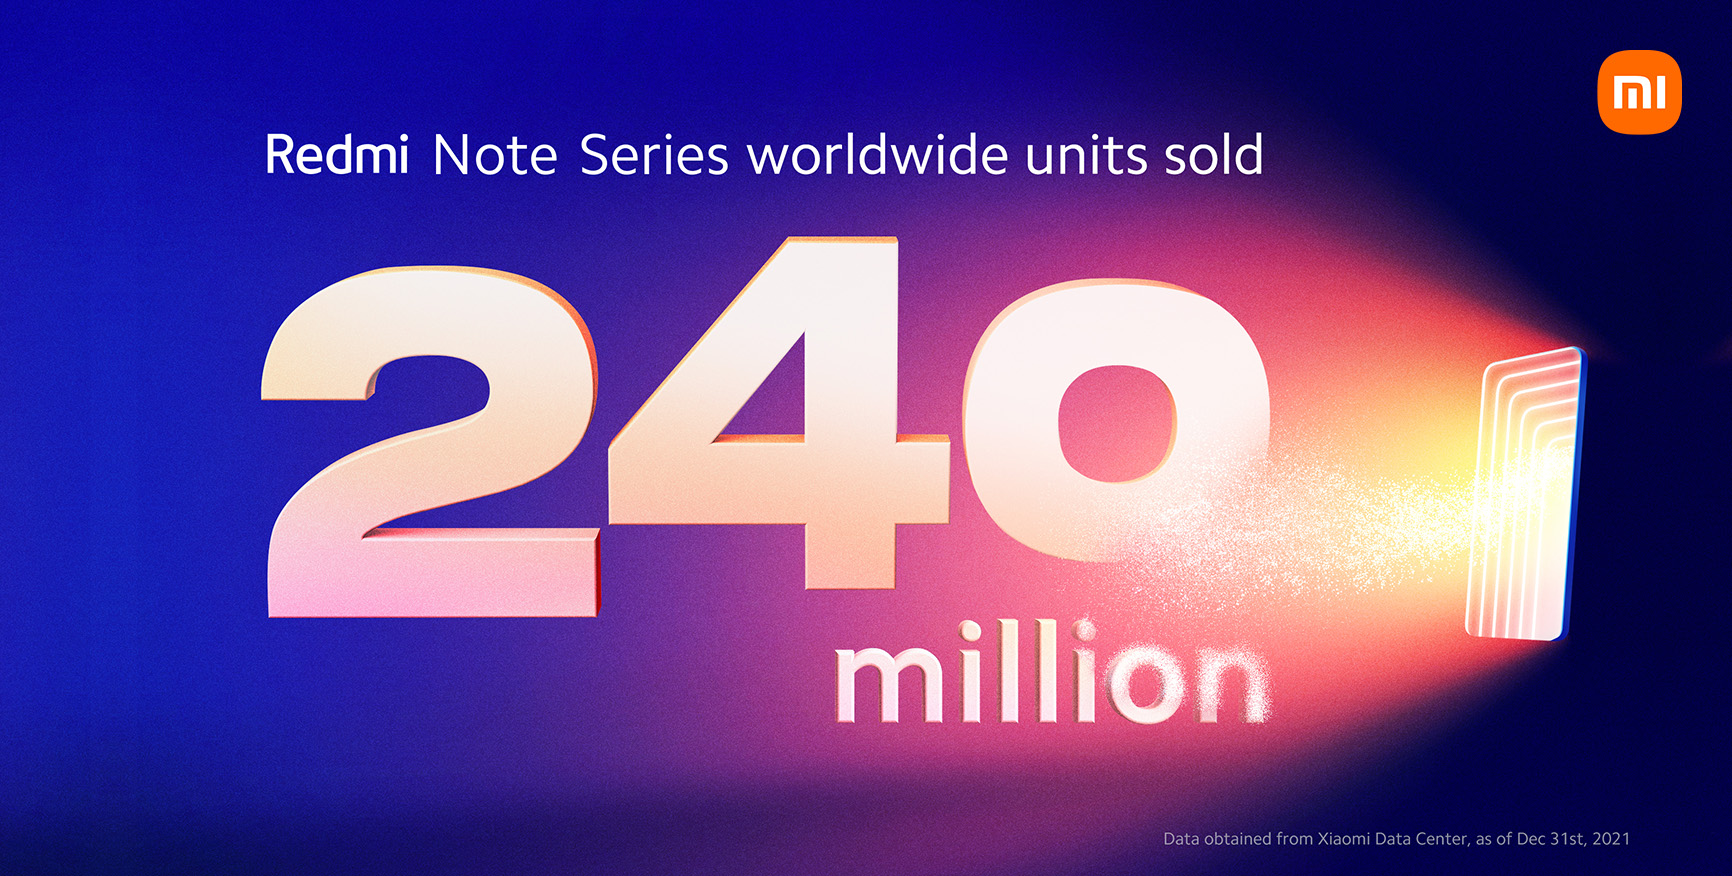 Redmi Note Series worldwide units sold 240 million!